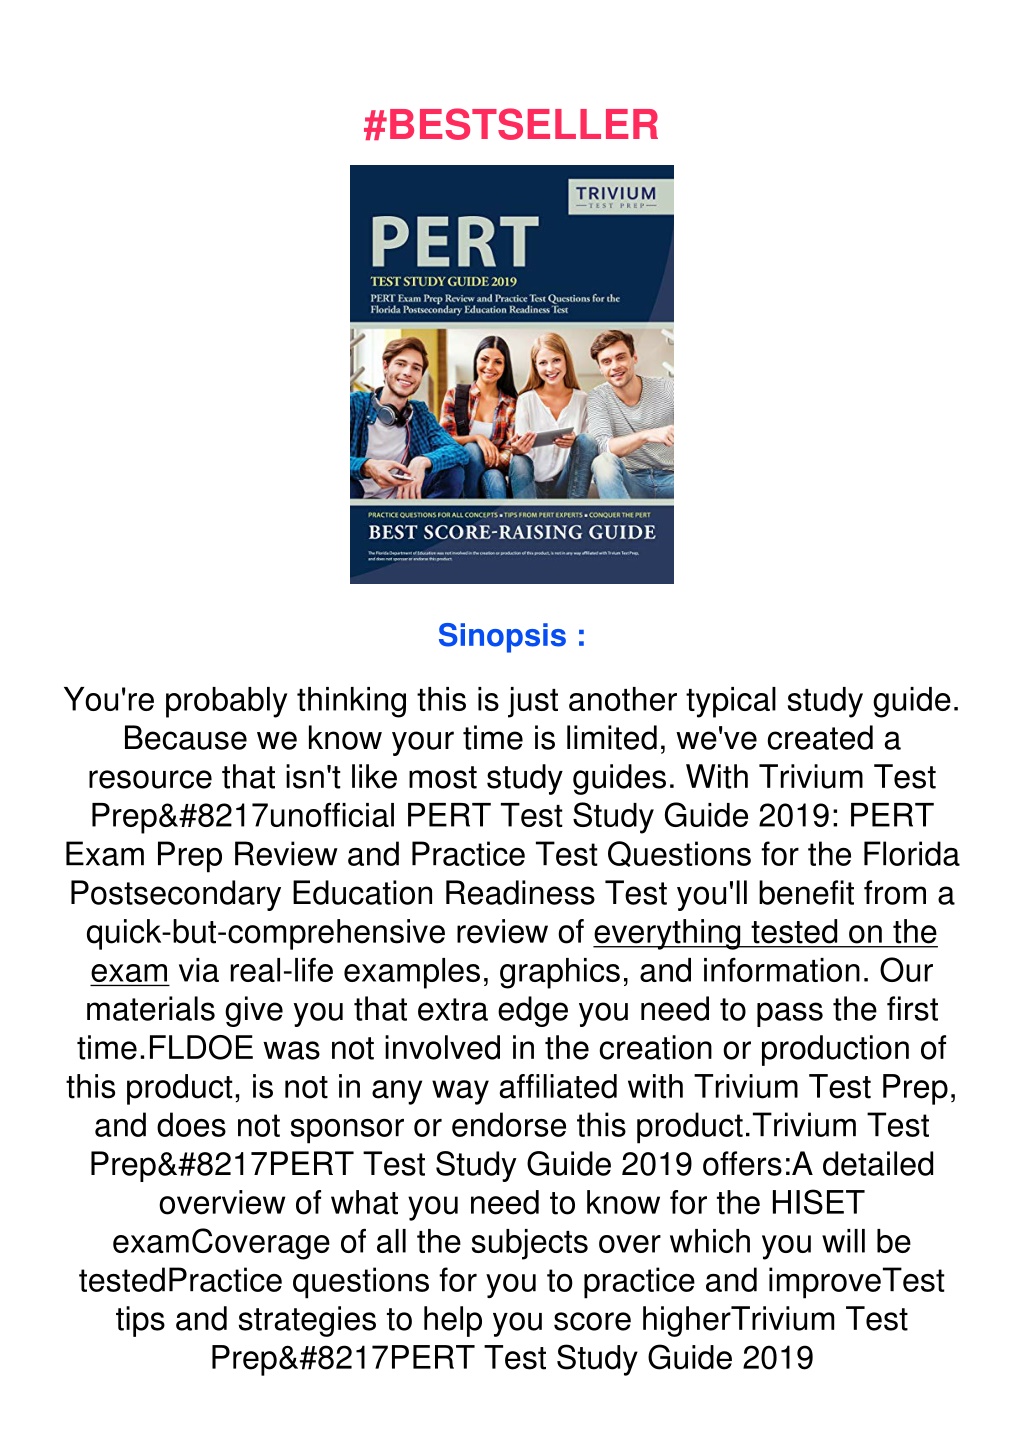 pert test study guide